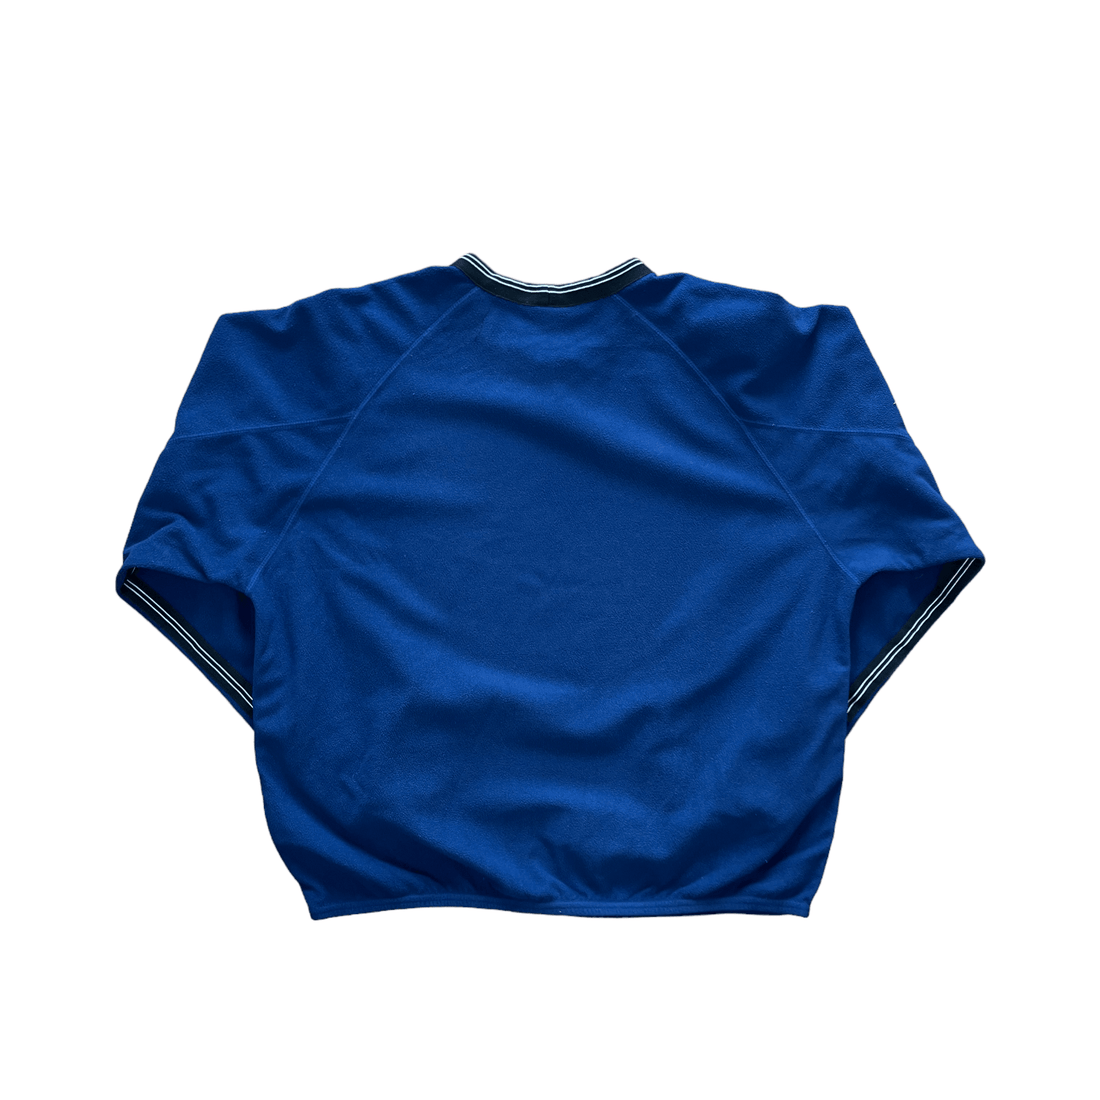 Vintage 90s Navy Blue Nike Fleece Sweatshirt - Medium - The Streetwear Studio